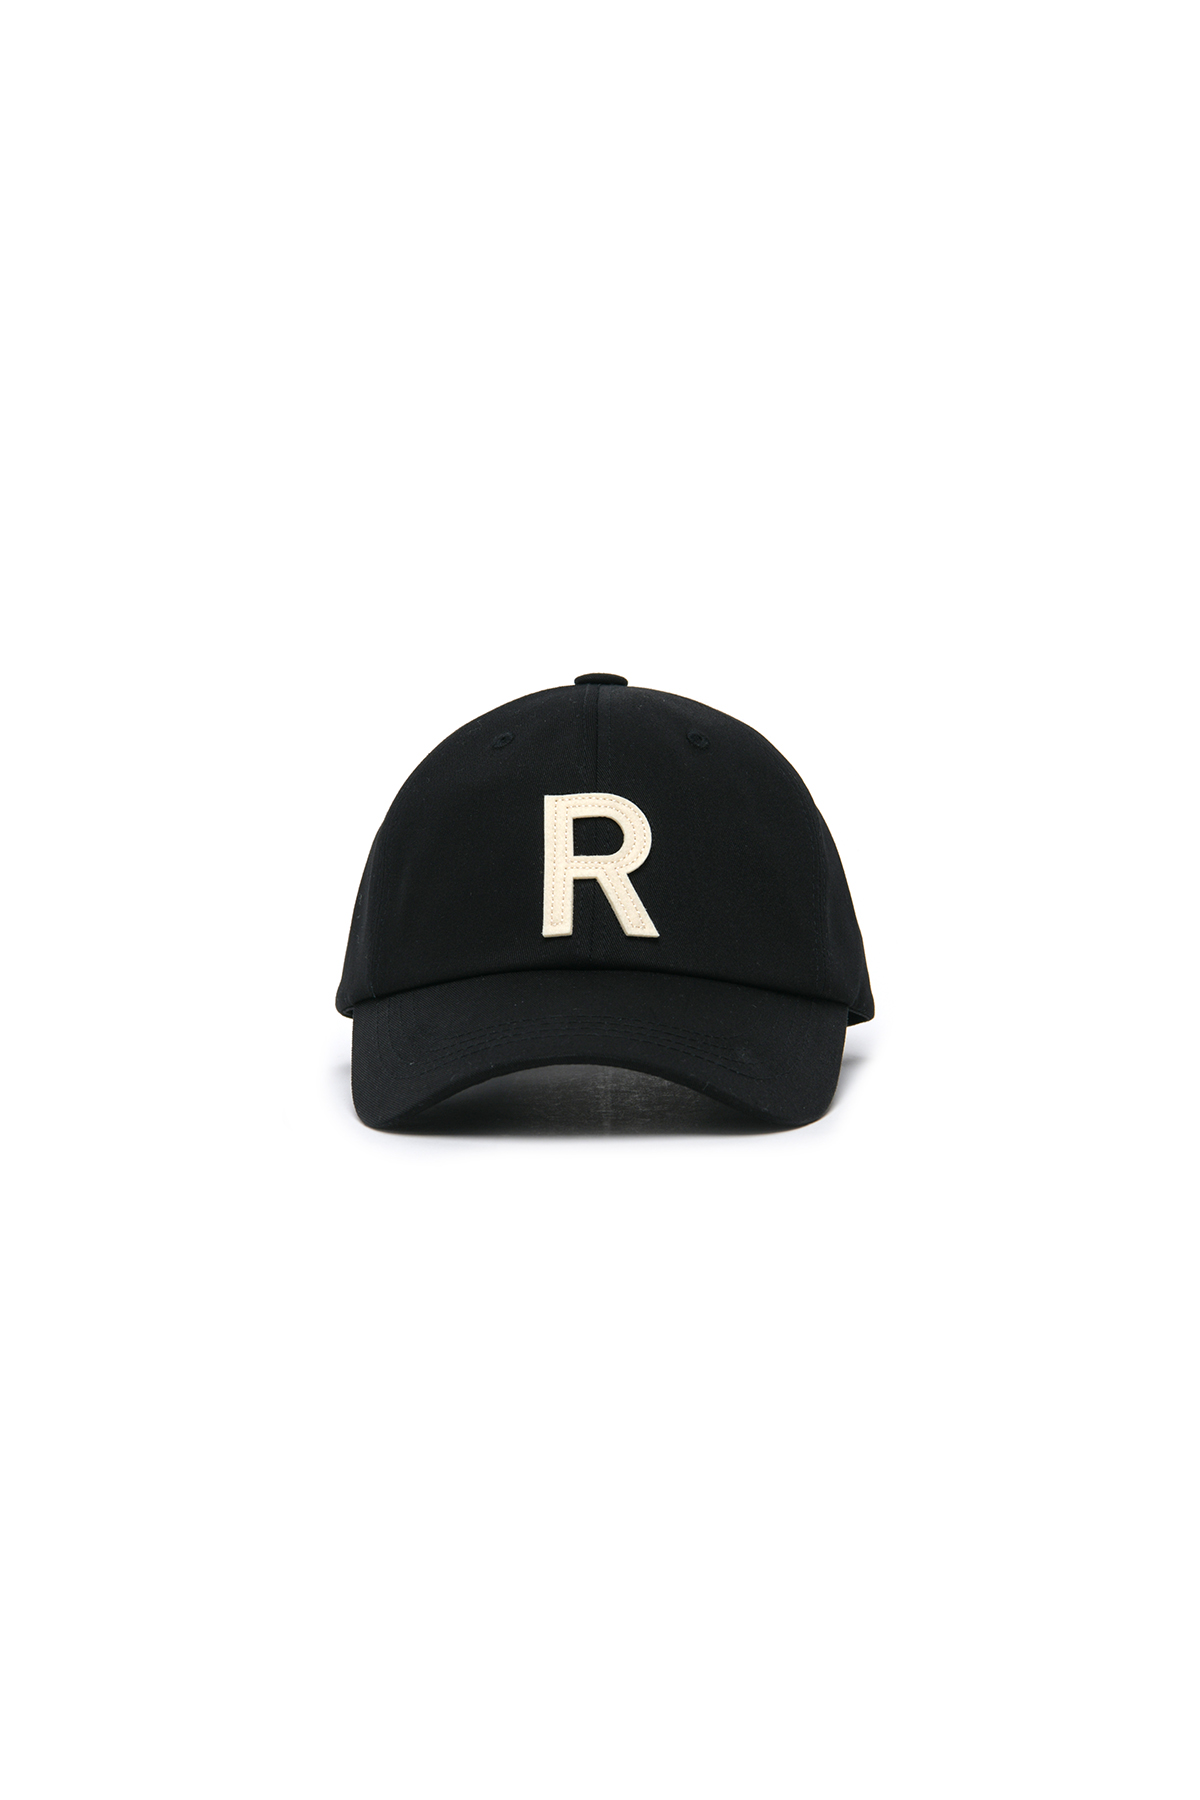 R PATCH BALL CAP BLACK